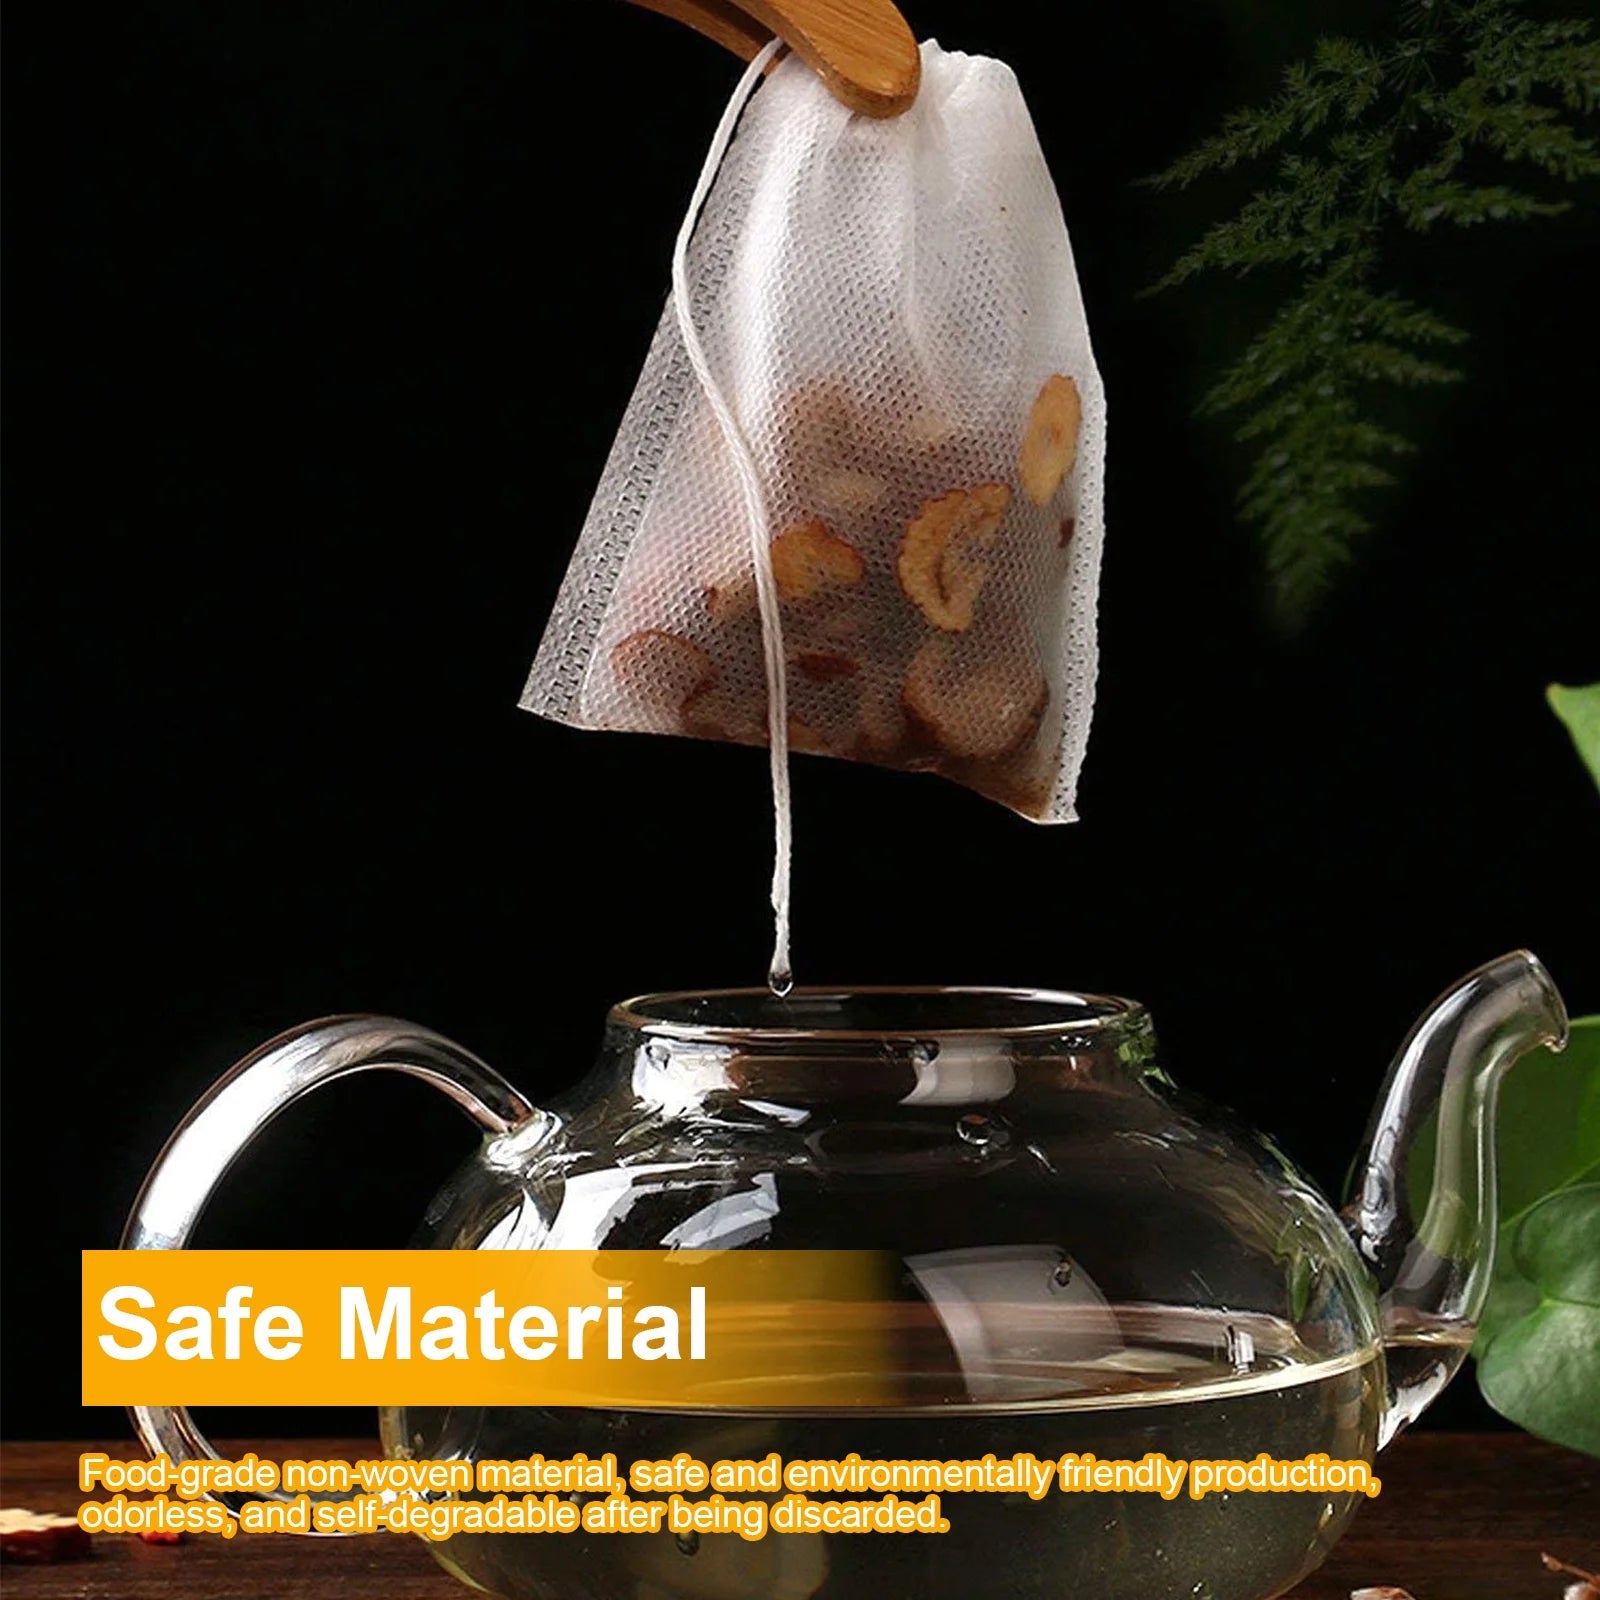 Disposable Tea Filter Bags, CELECTIGO Empty Drawstring Seal Filter Tea Bags, Safe & Natural Material, 1-Cup Capacity, Tea Filters Infuser for Loose Leaf Tea, Coffee, Spice, Herbs (2.76